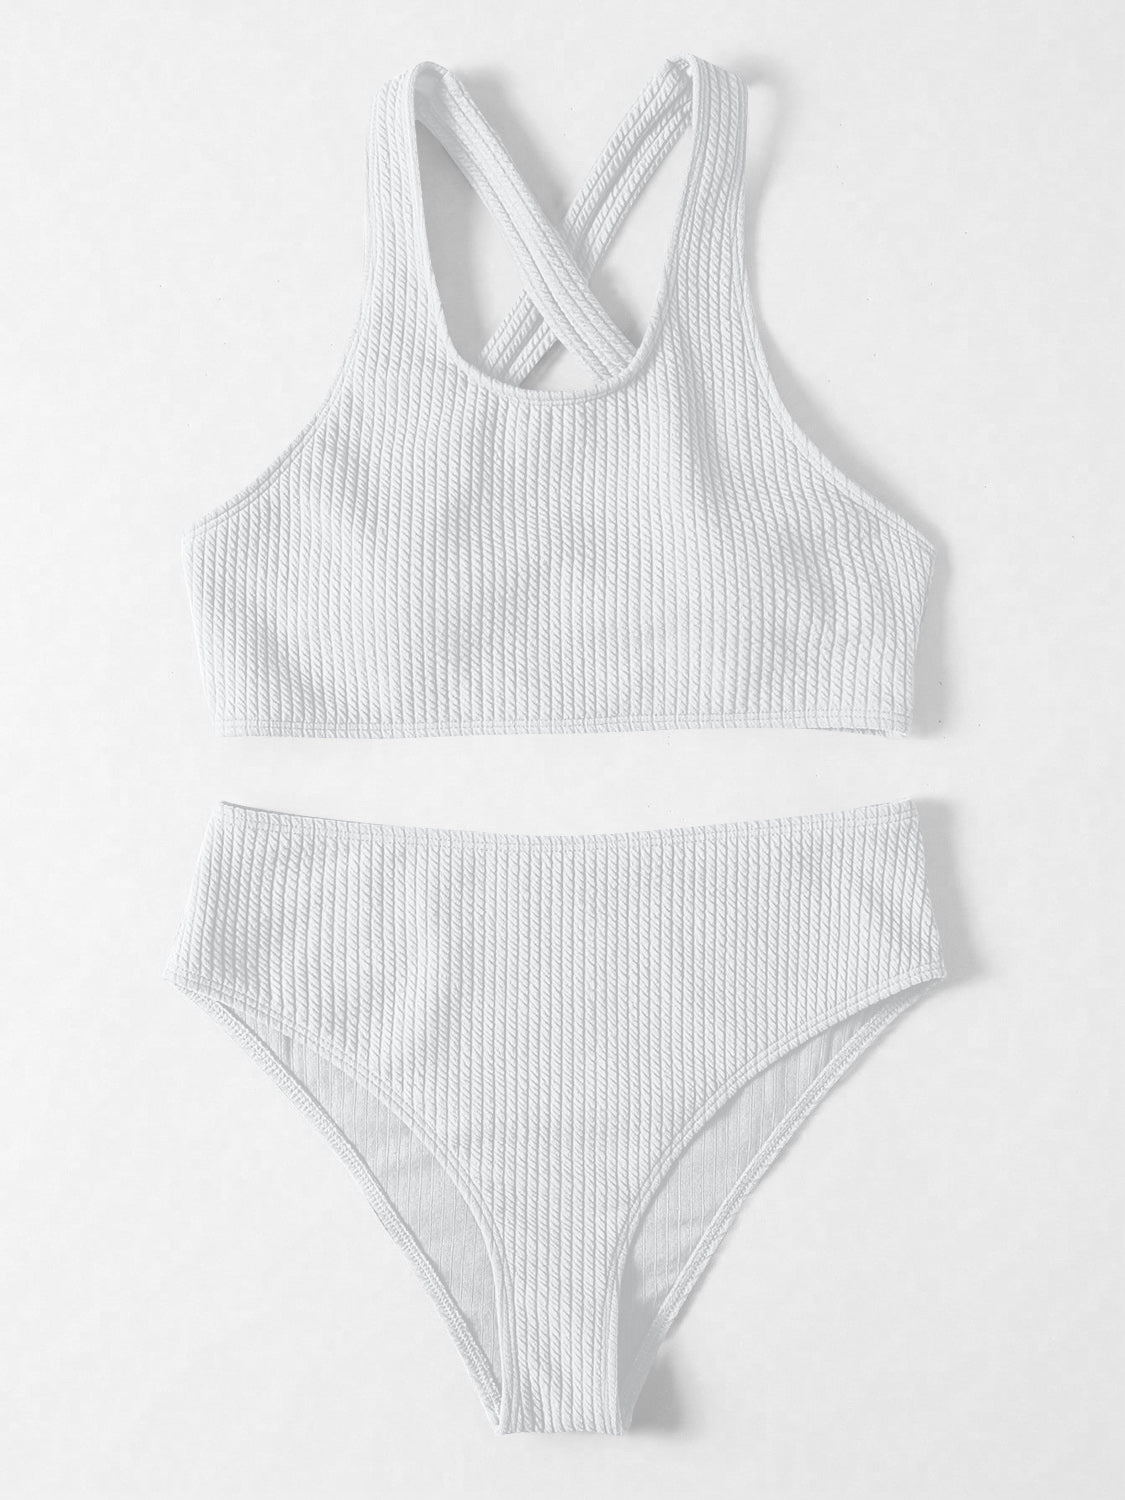 a women's white bikini top and bottom